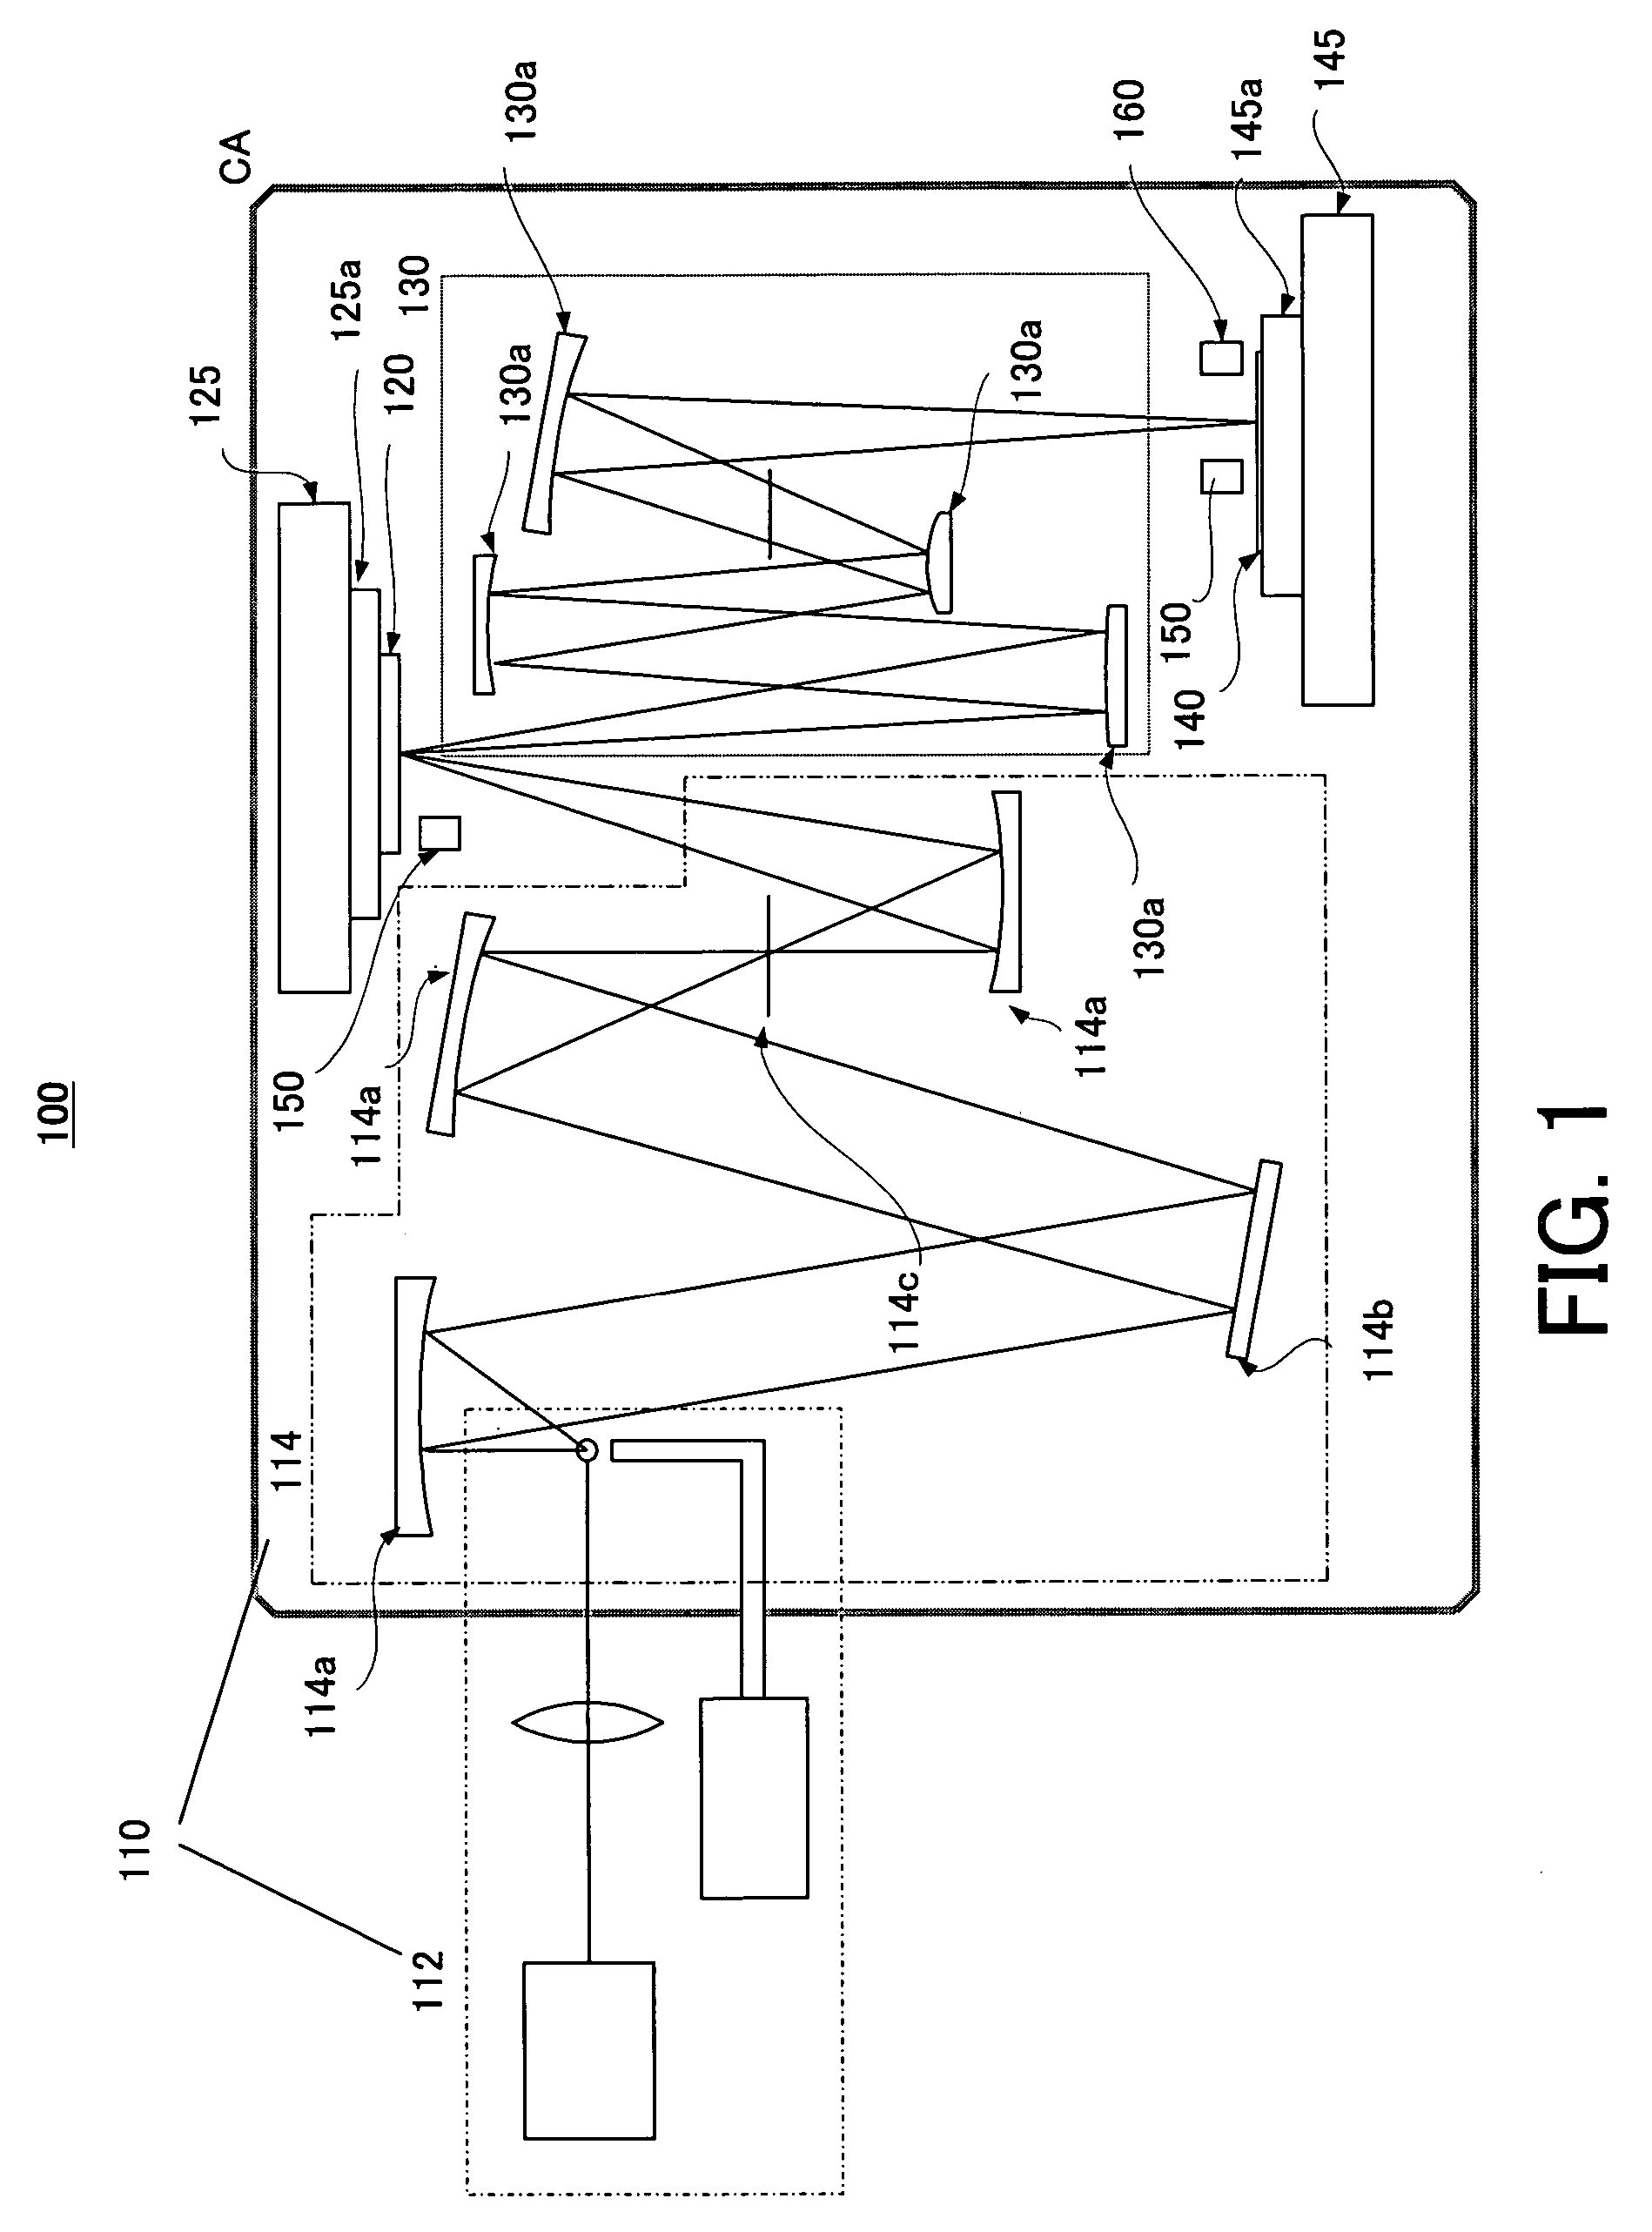 Illumination apparatus, projection exposure apparatus, and device fabrication method